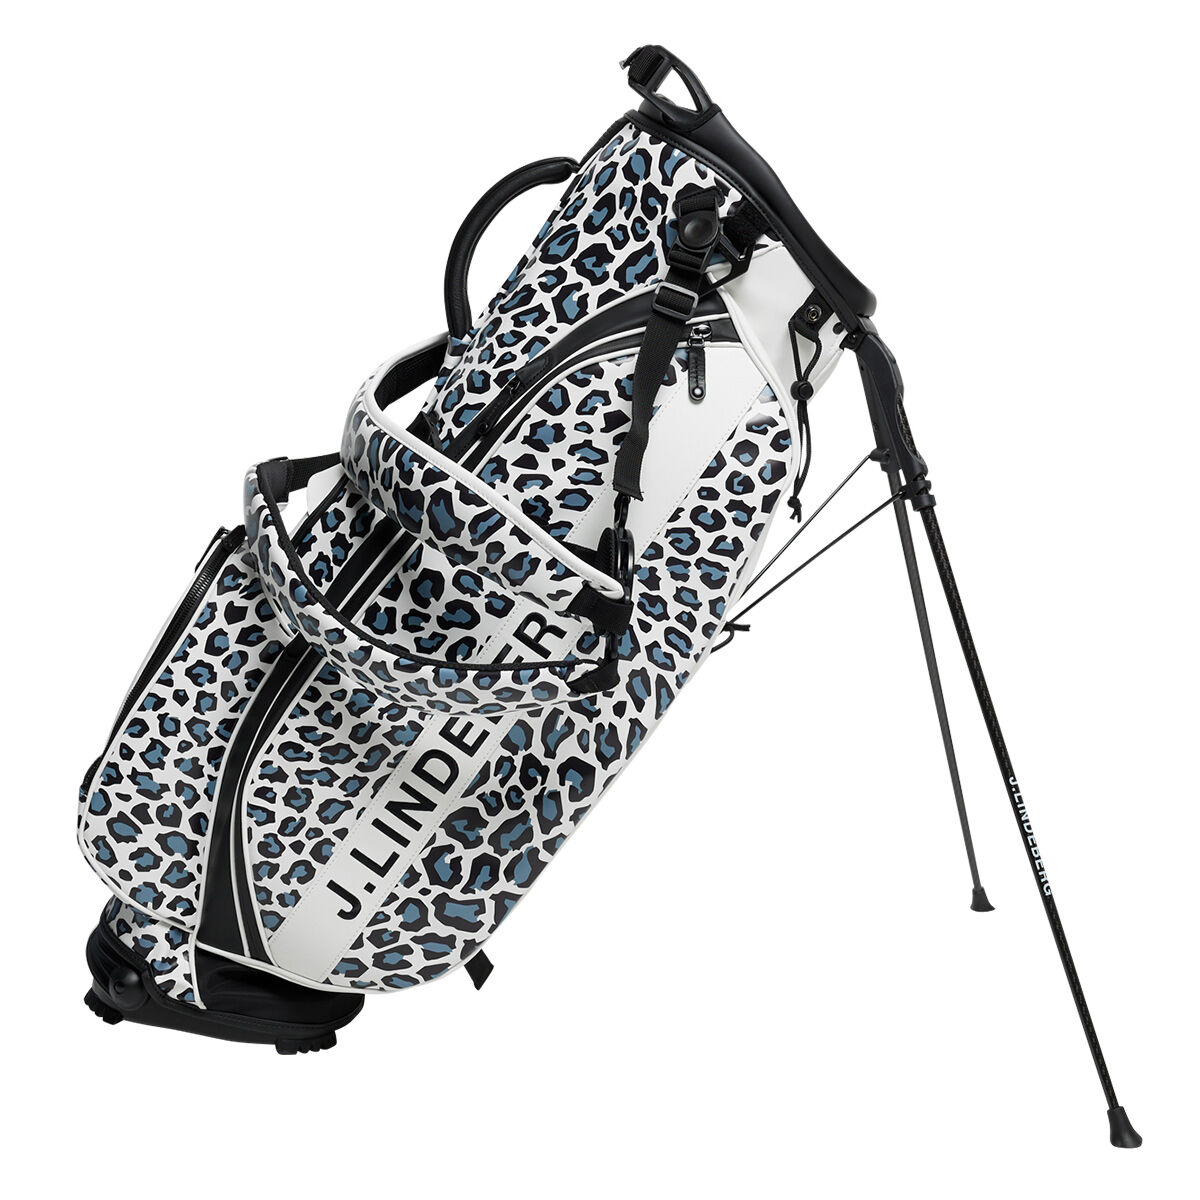 J.Lindeberg Play Print Golf Stand Bag, Bw leopard | American Golf